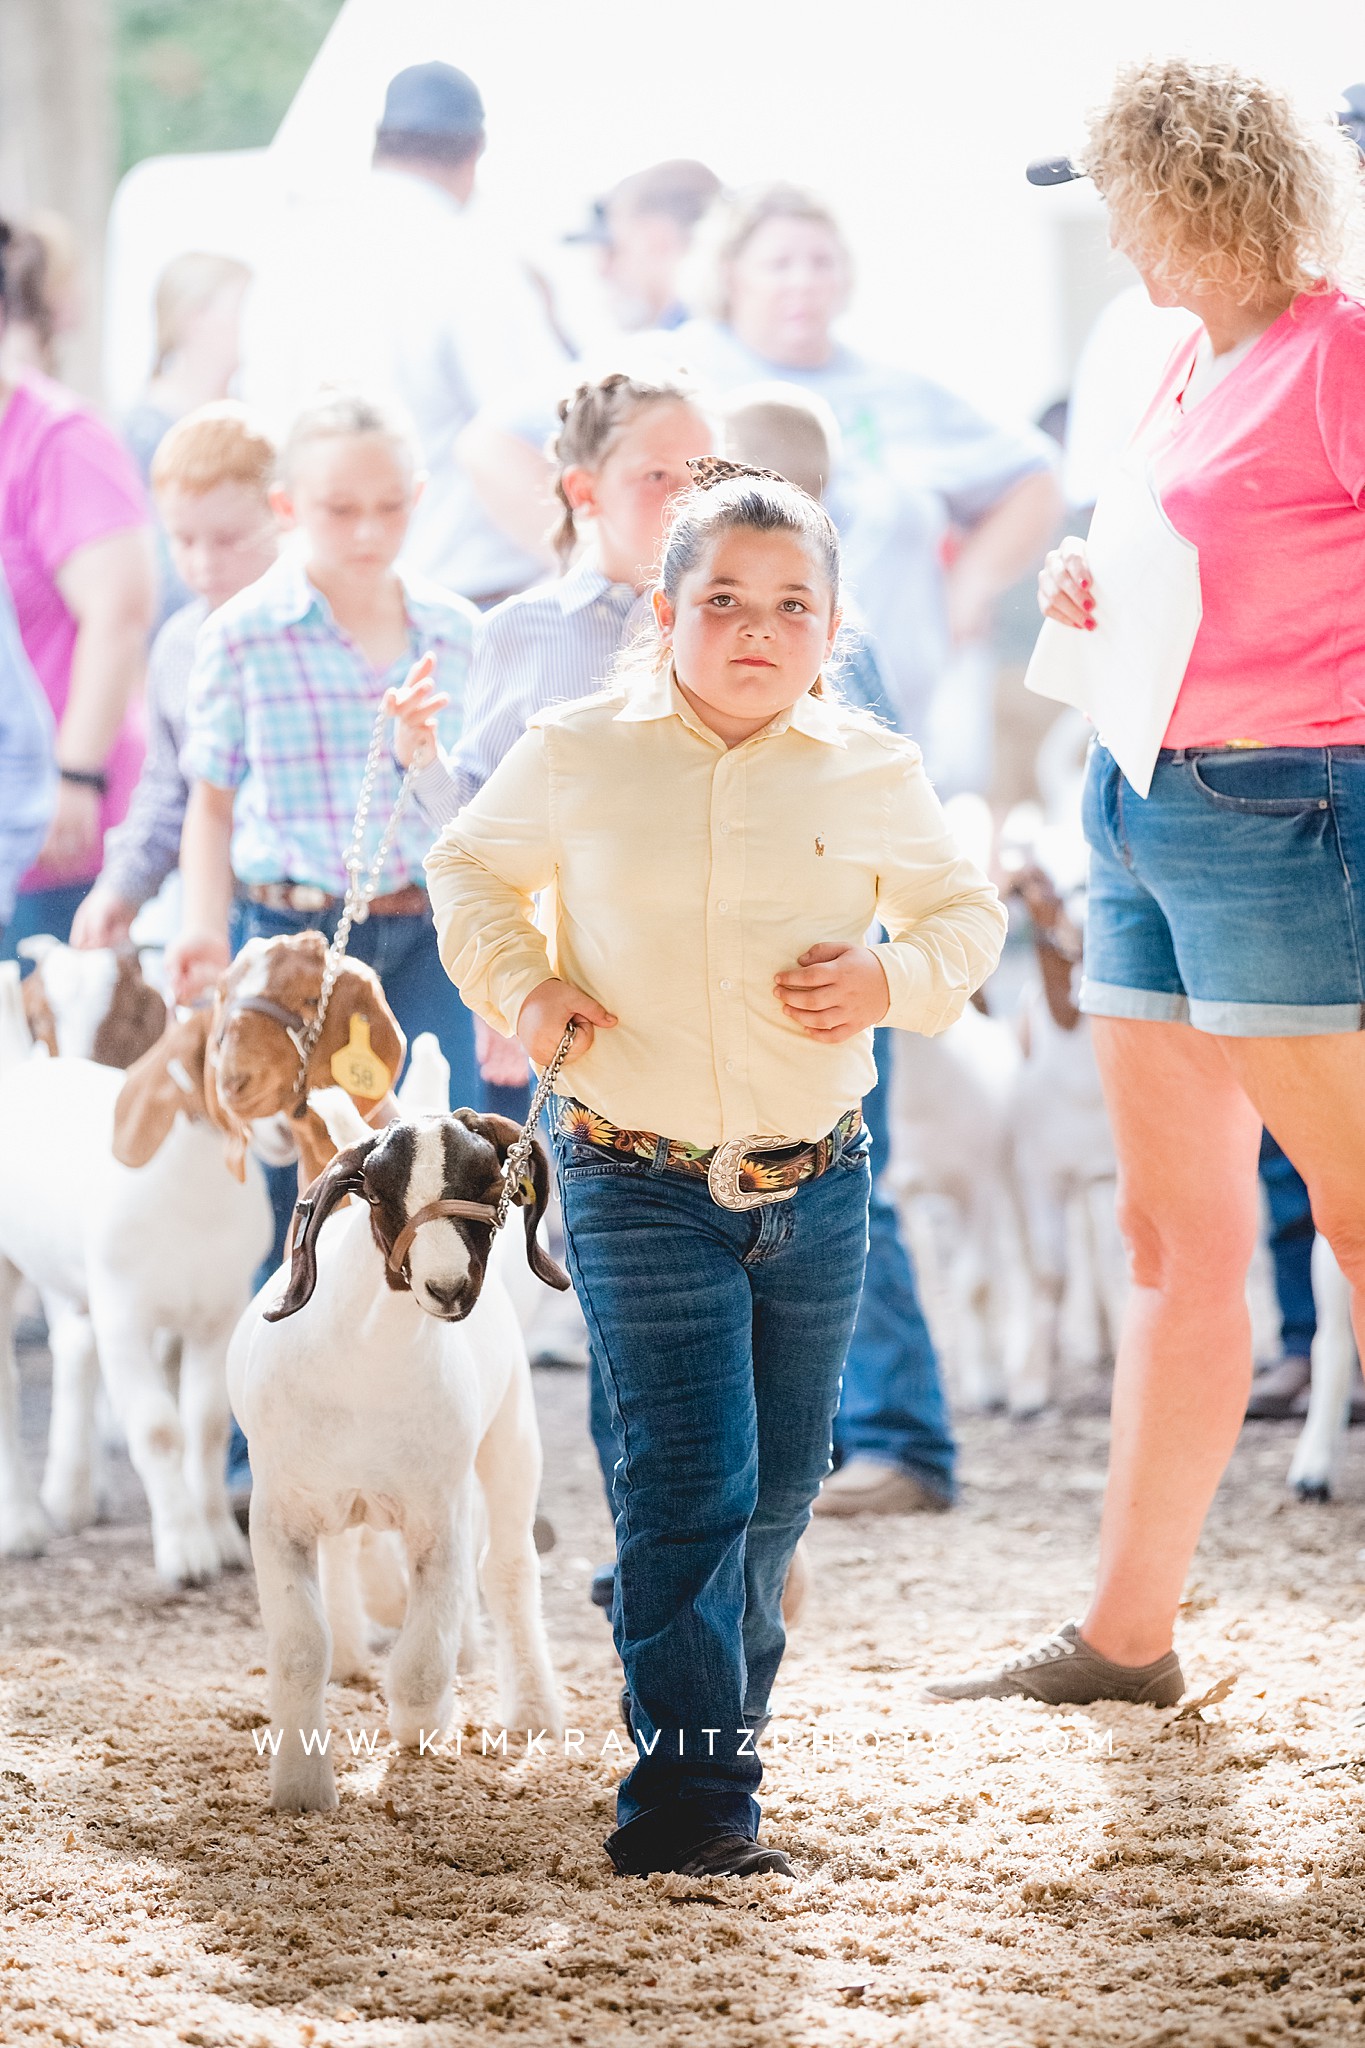 goat show county fair photography kim kravitz